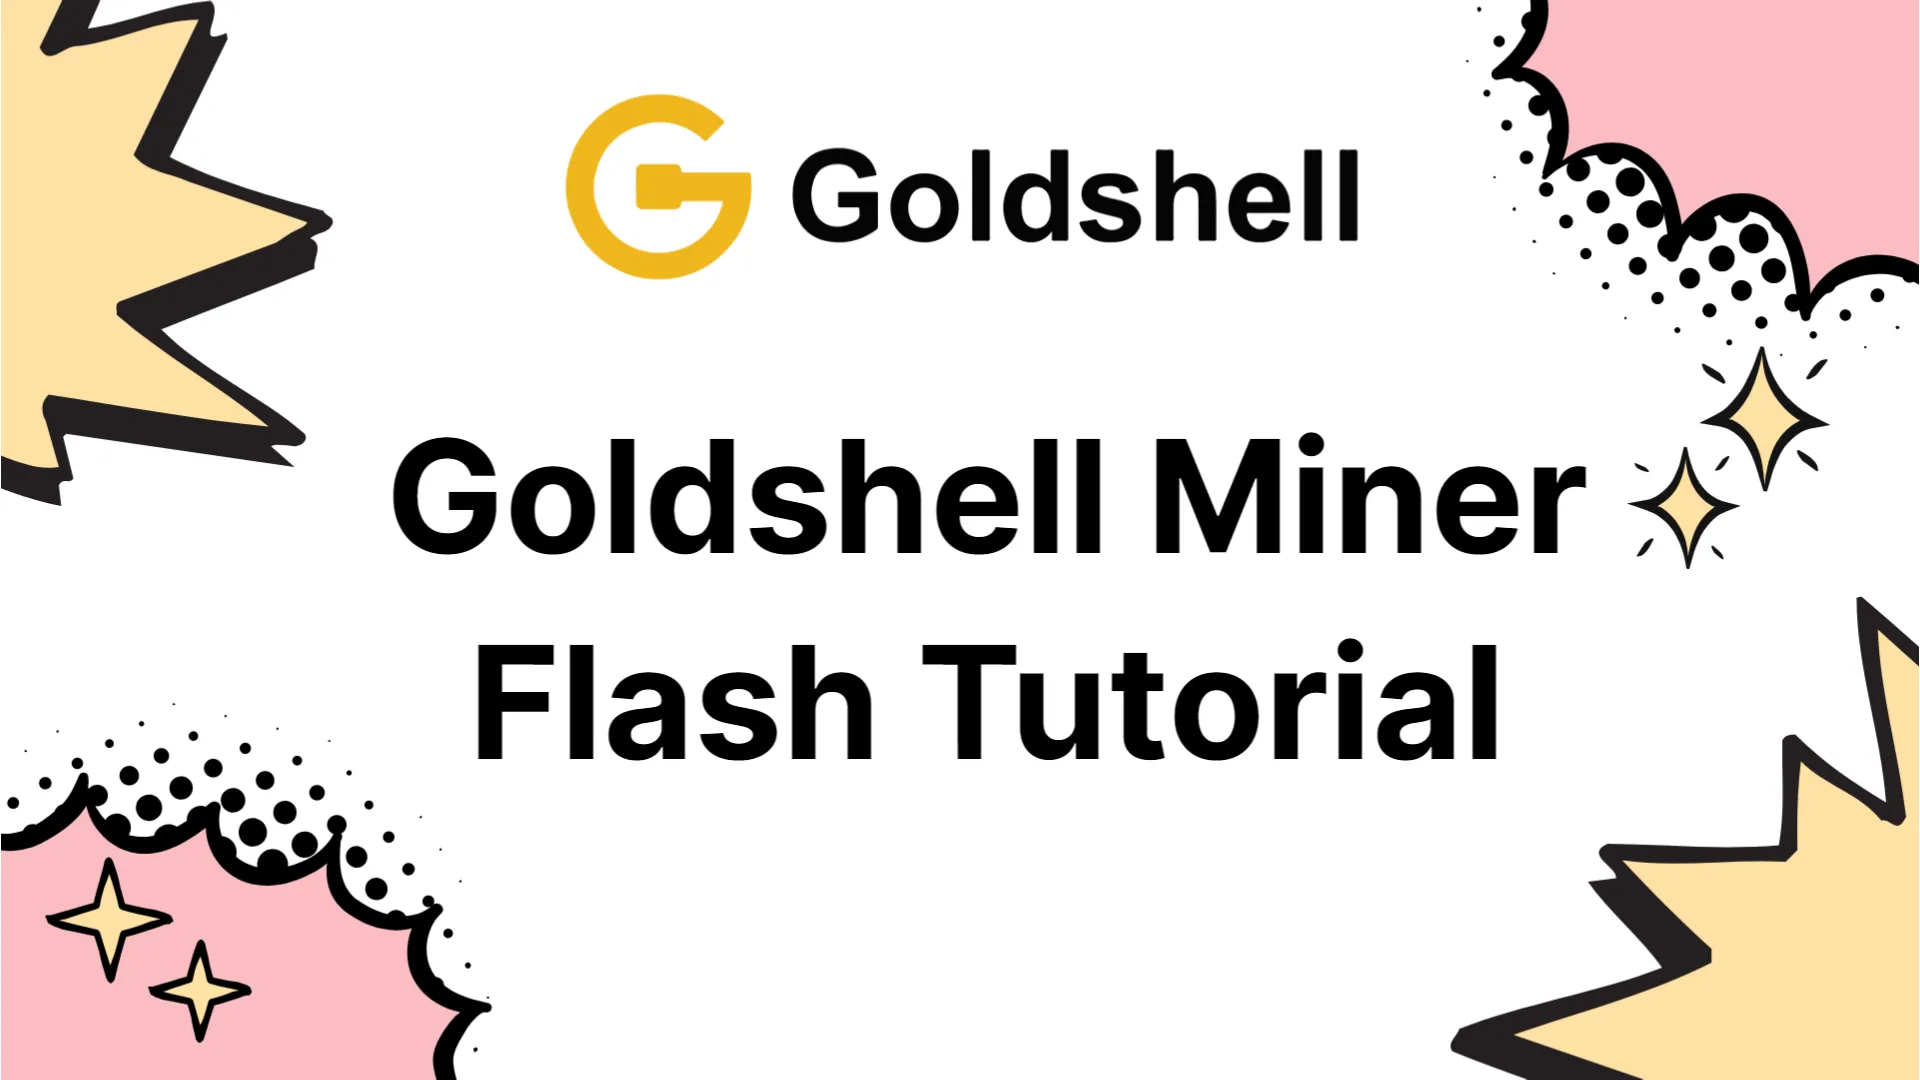 Goldshell Miner Flash Tutorial